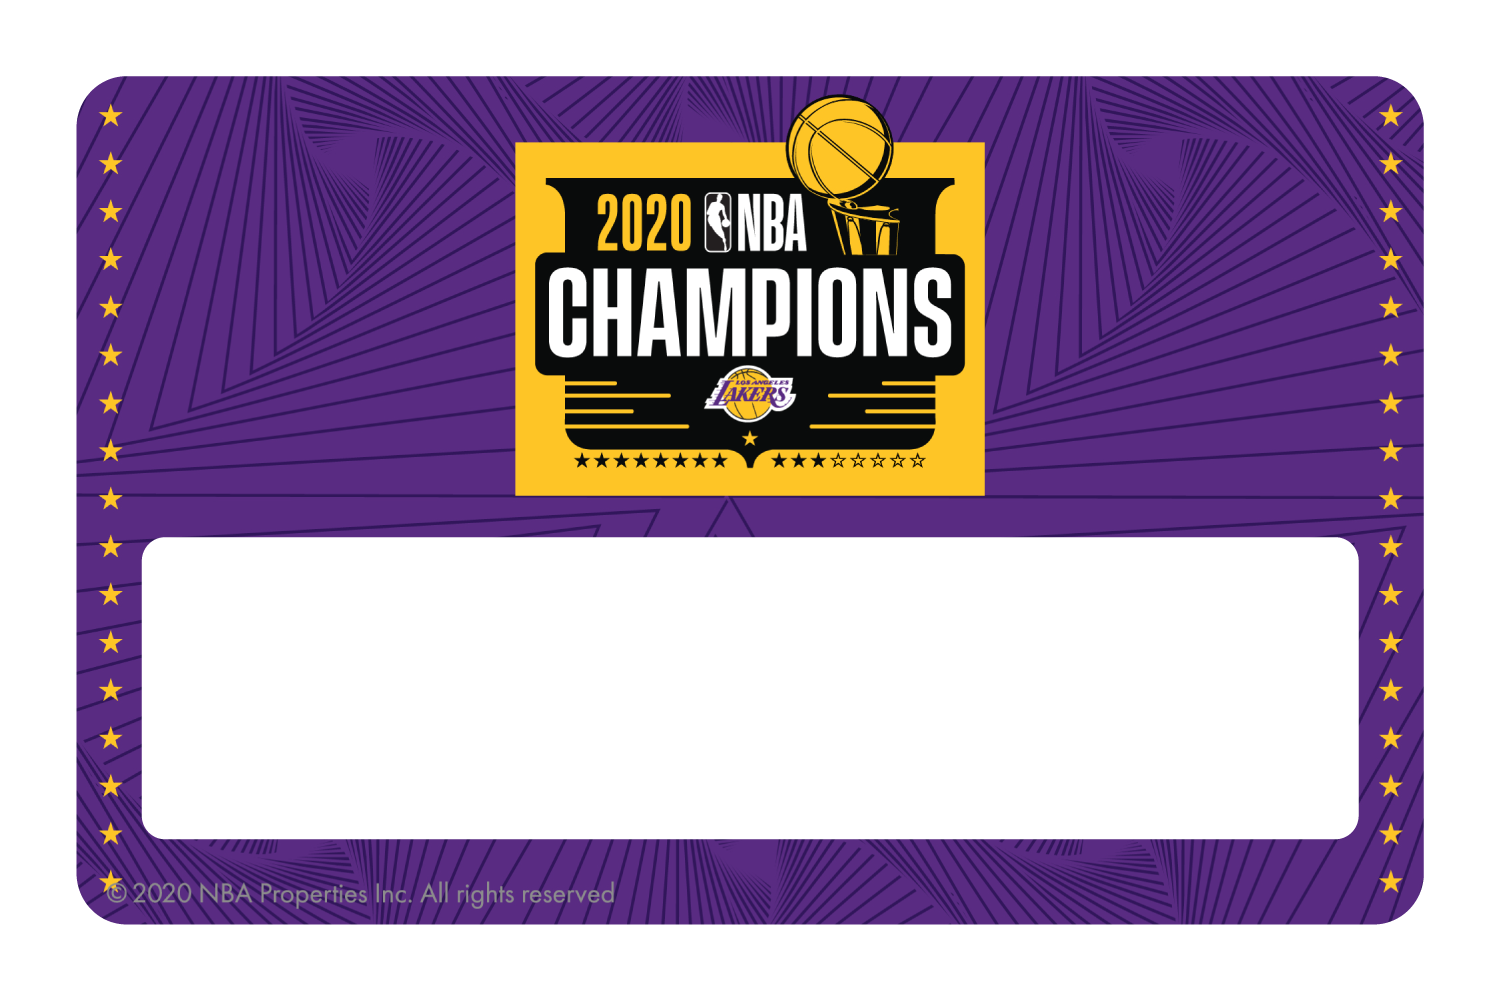 2020 NBA Champions: Los Angeles Lakers (P)